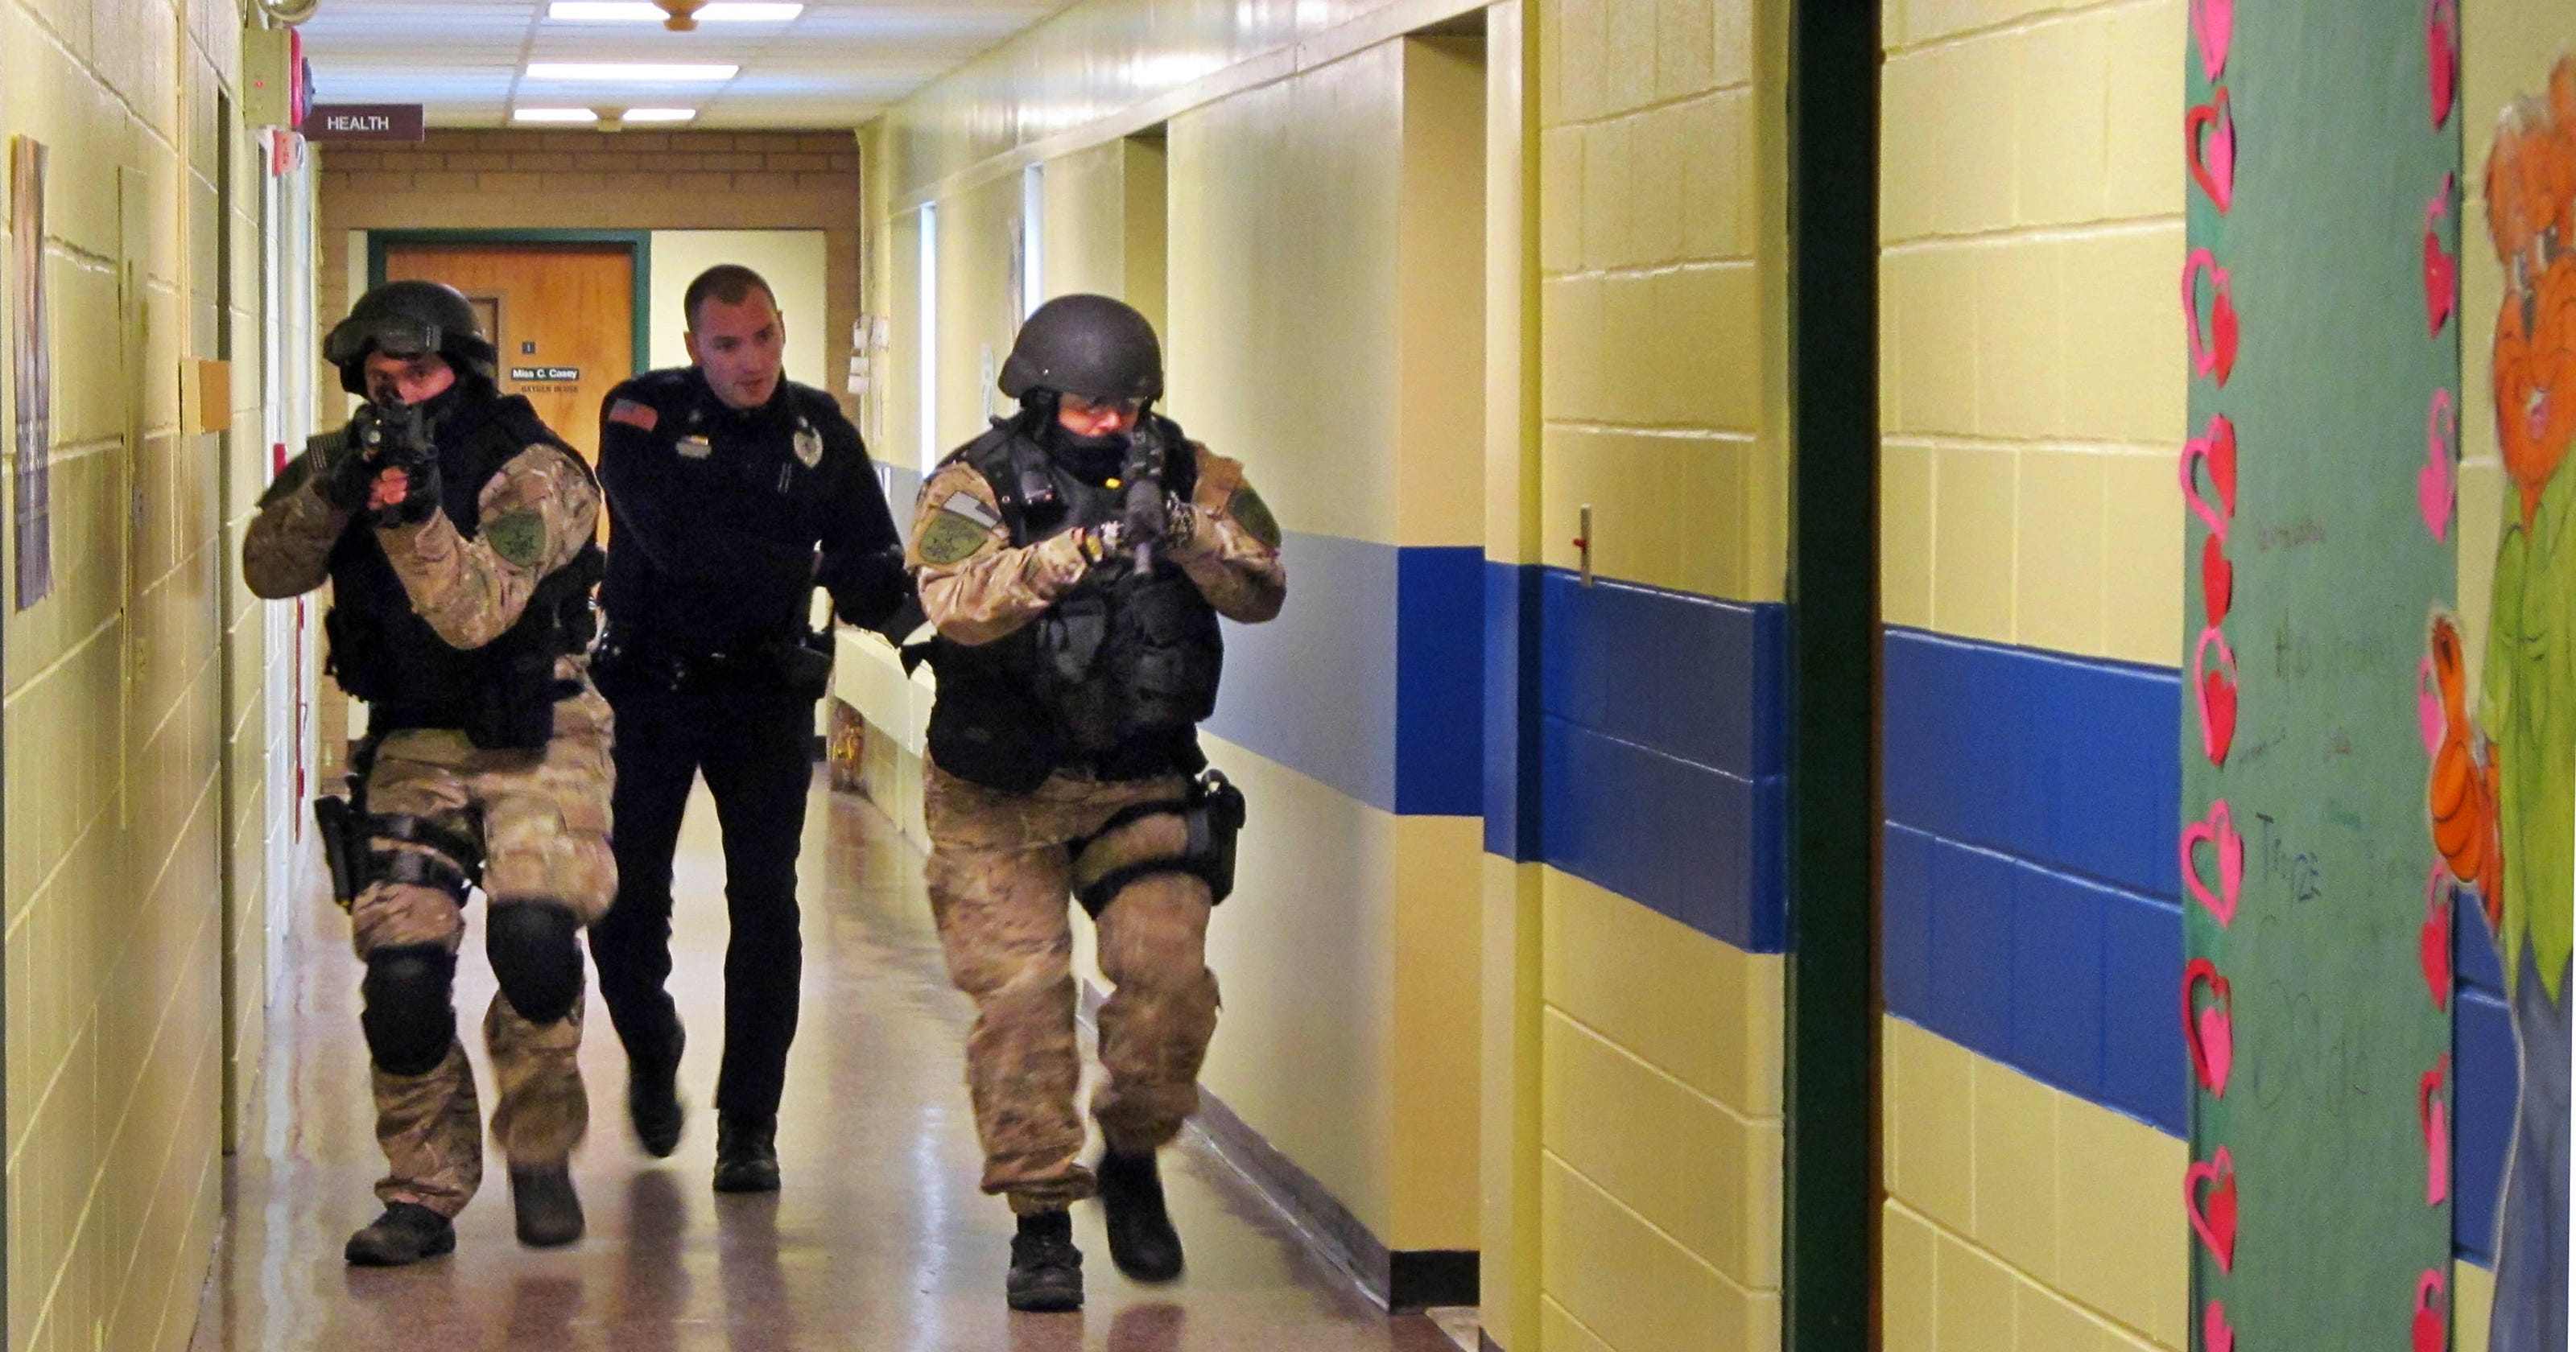 Despite beefedup security, school shootings continue